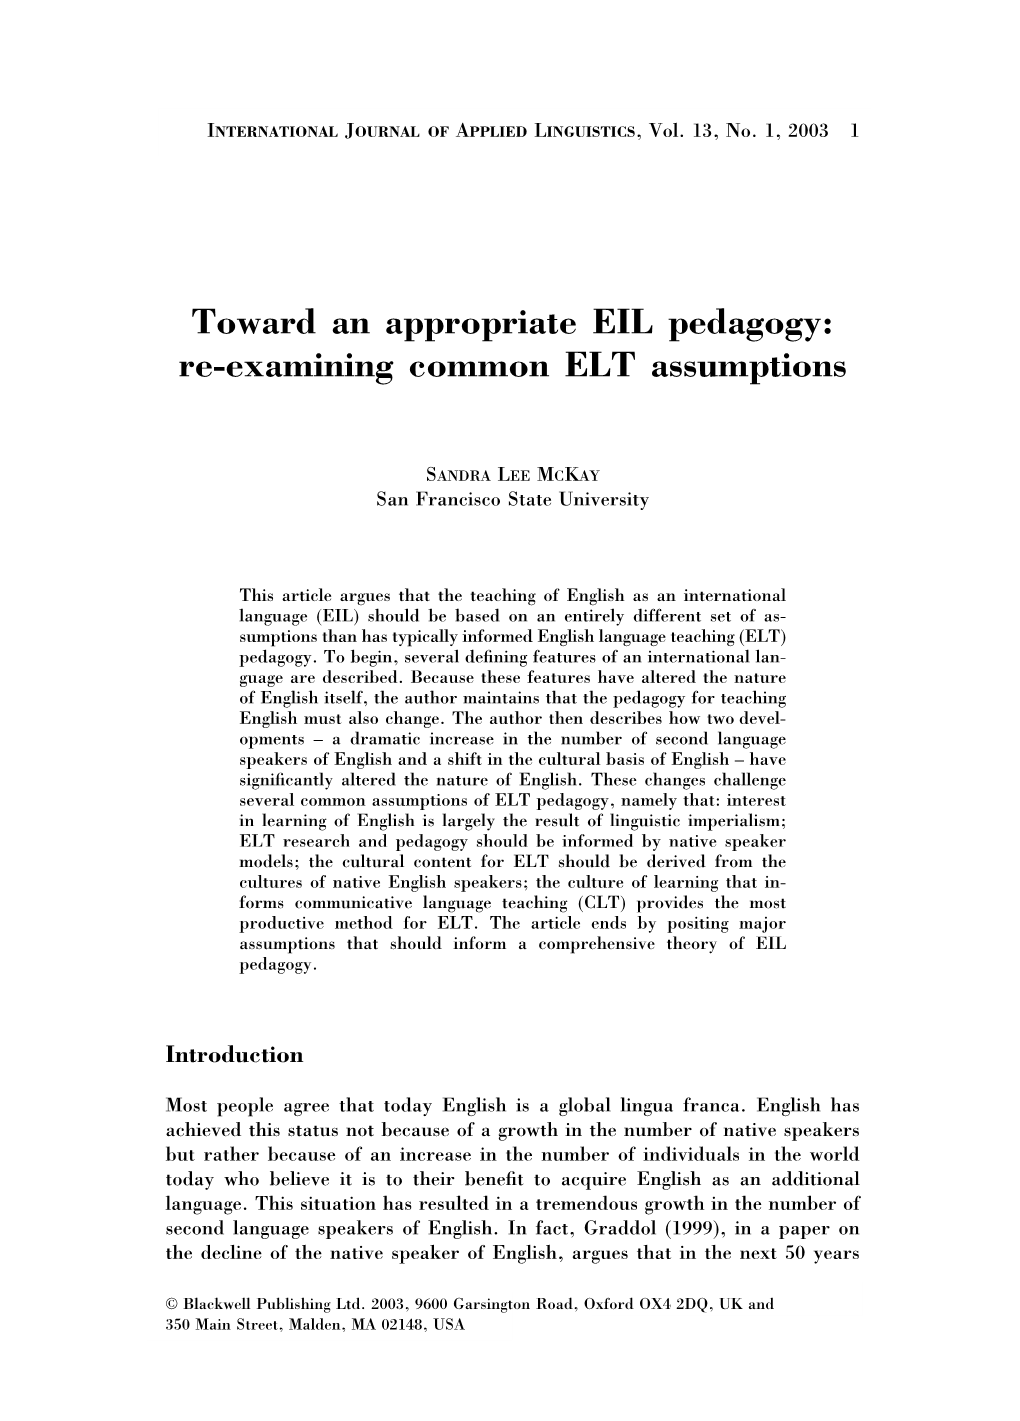 Toward an Appropriate EIL Pedagogy: Re-Examining Common ELT Assumptions